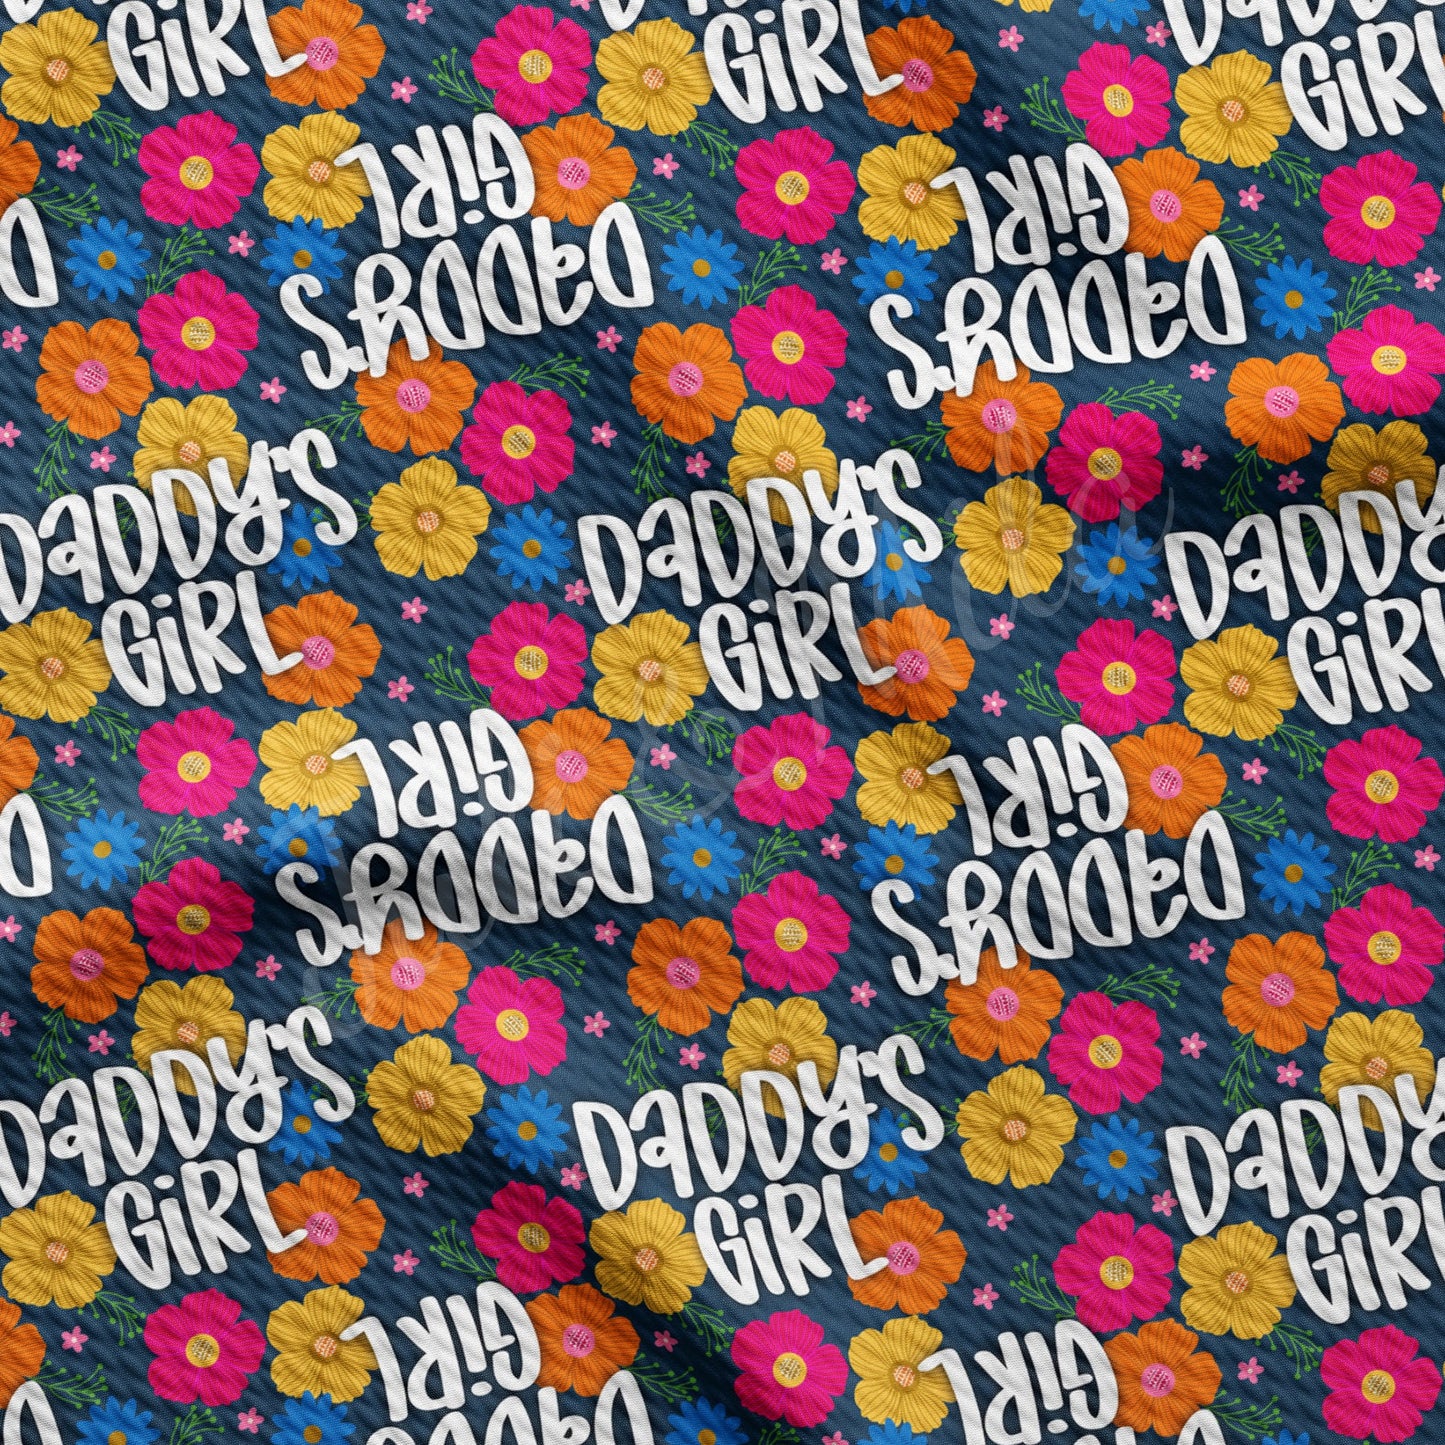 Daddys Girl Bullet Fabric AA1151